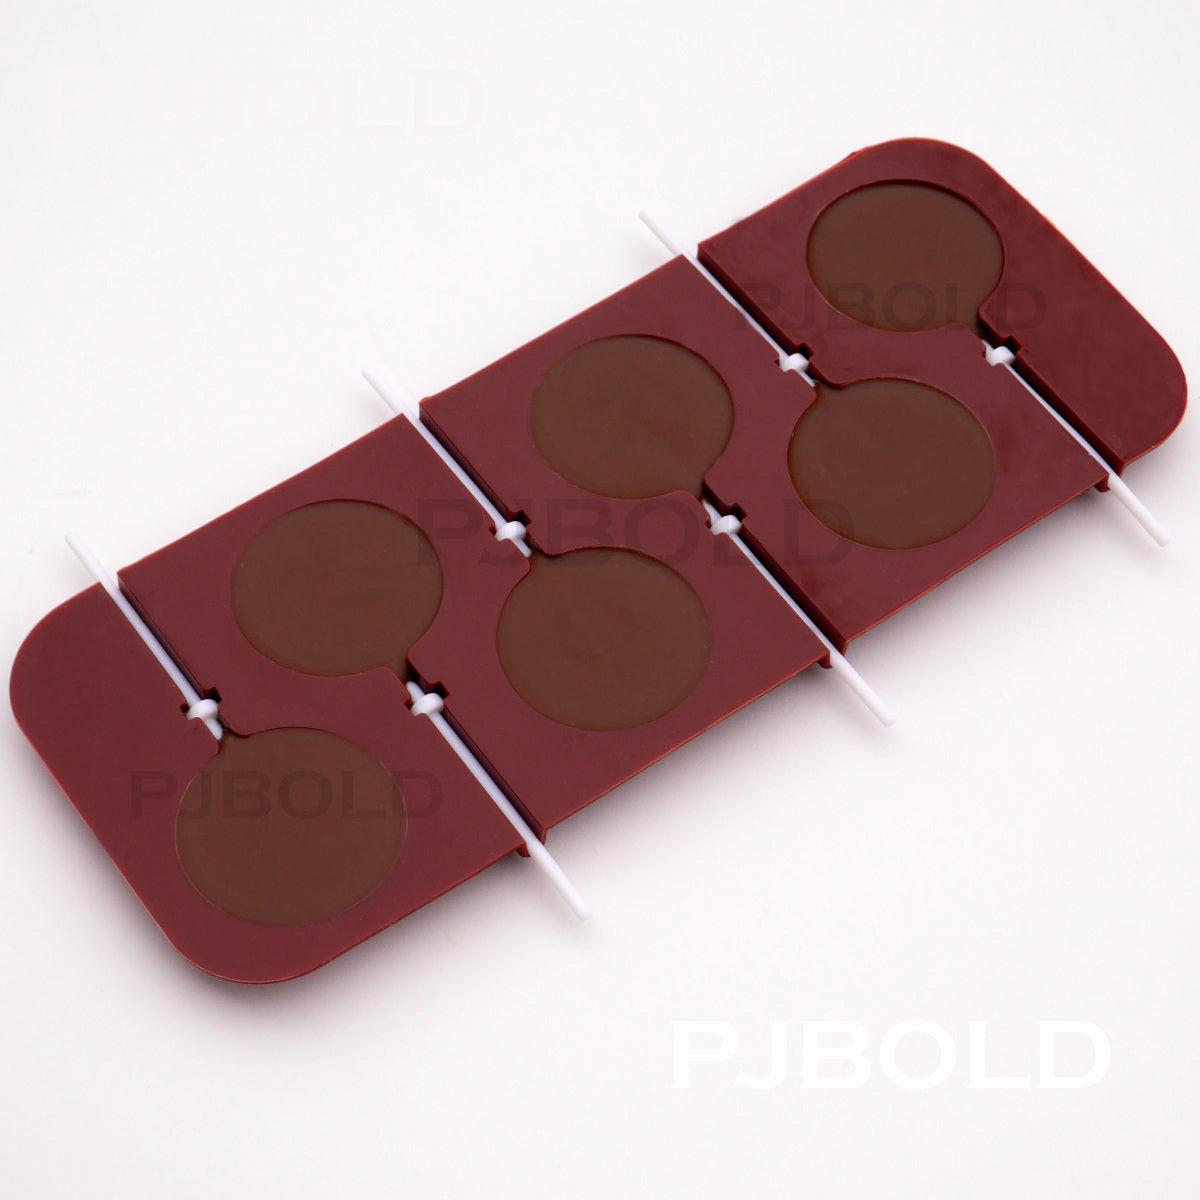 Pj Bold Marijuana Leaf Embossed Silicone Chocolate Candy Mold Ice Cube Trays, 2 Pack